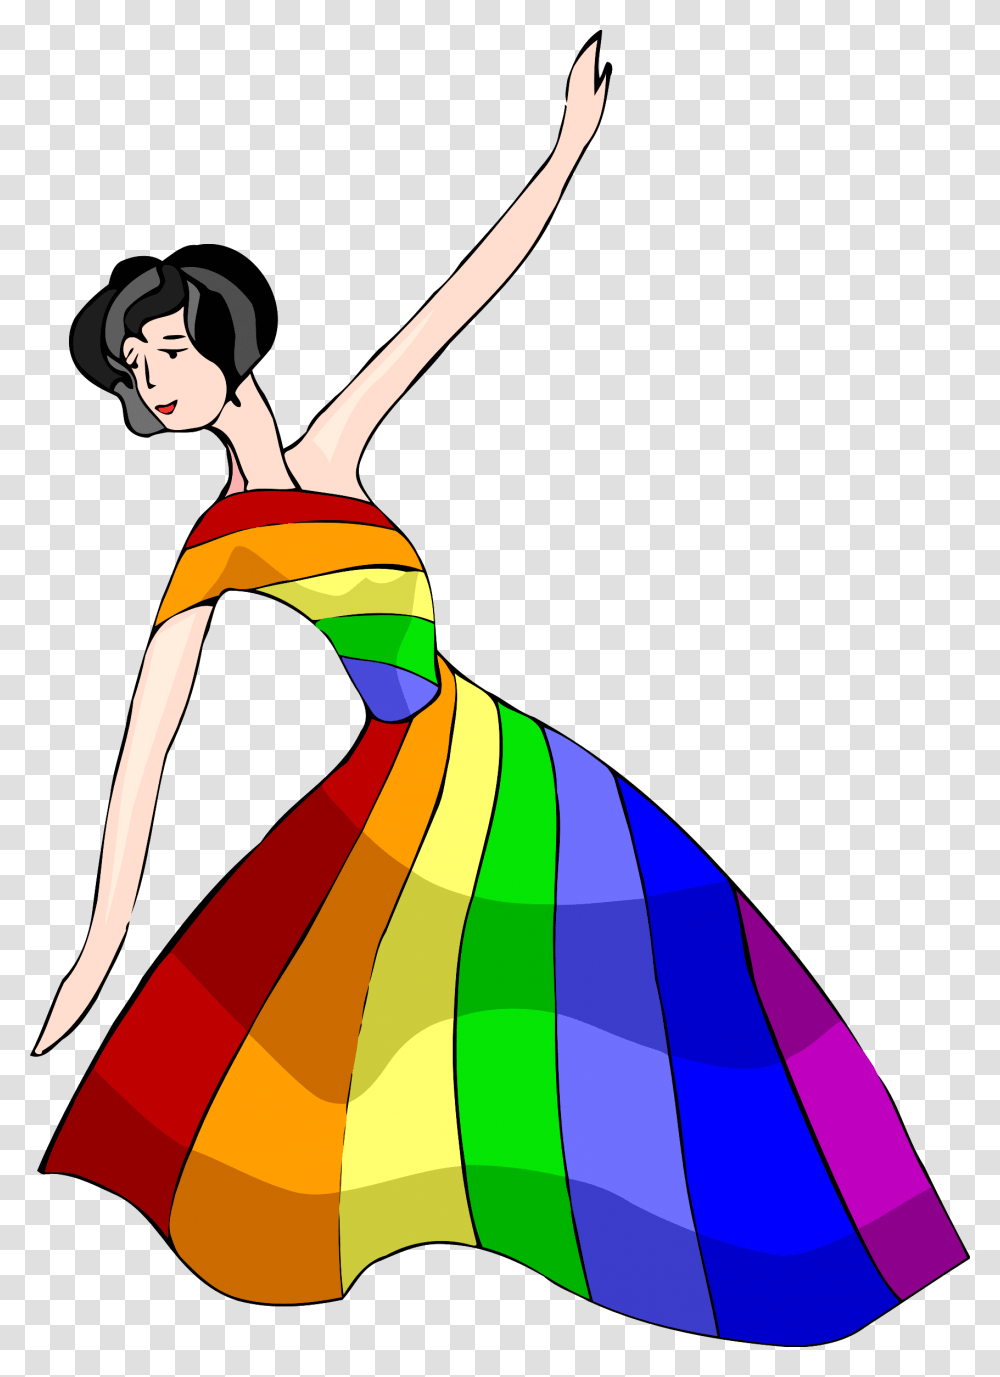 Great Dancer In Rainbow Dress Vector Clipart Image Rainbow Dress Clipart, Person, Human, Dance Pose, Leisure Activities Transparent Png